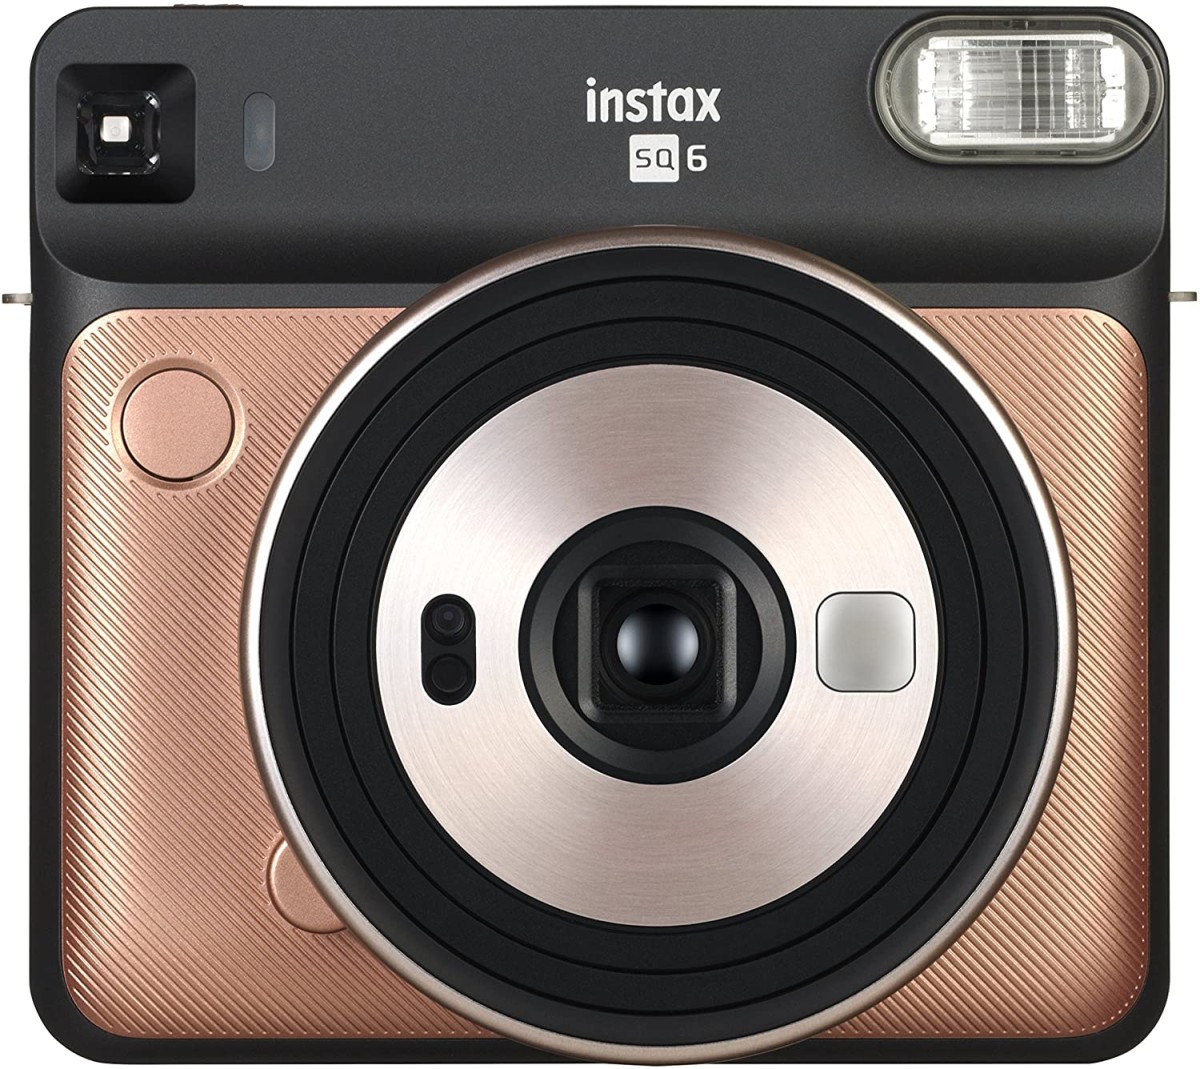 fujifilm instax square sq6 instant camera review